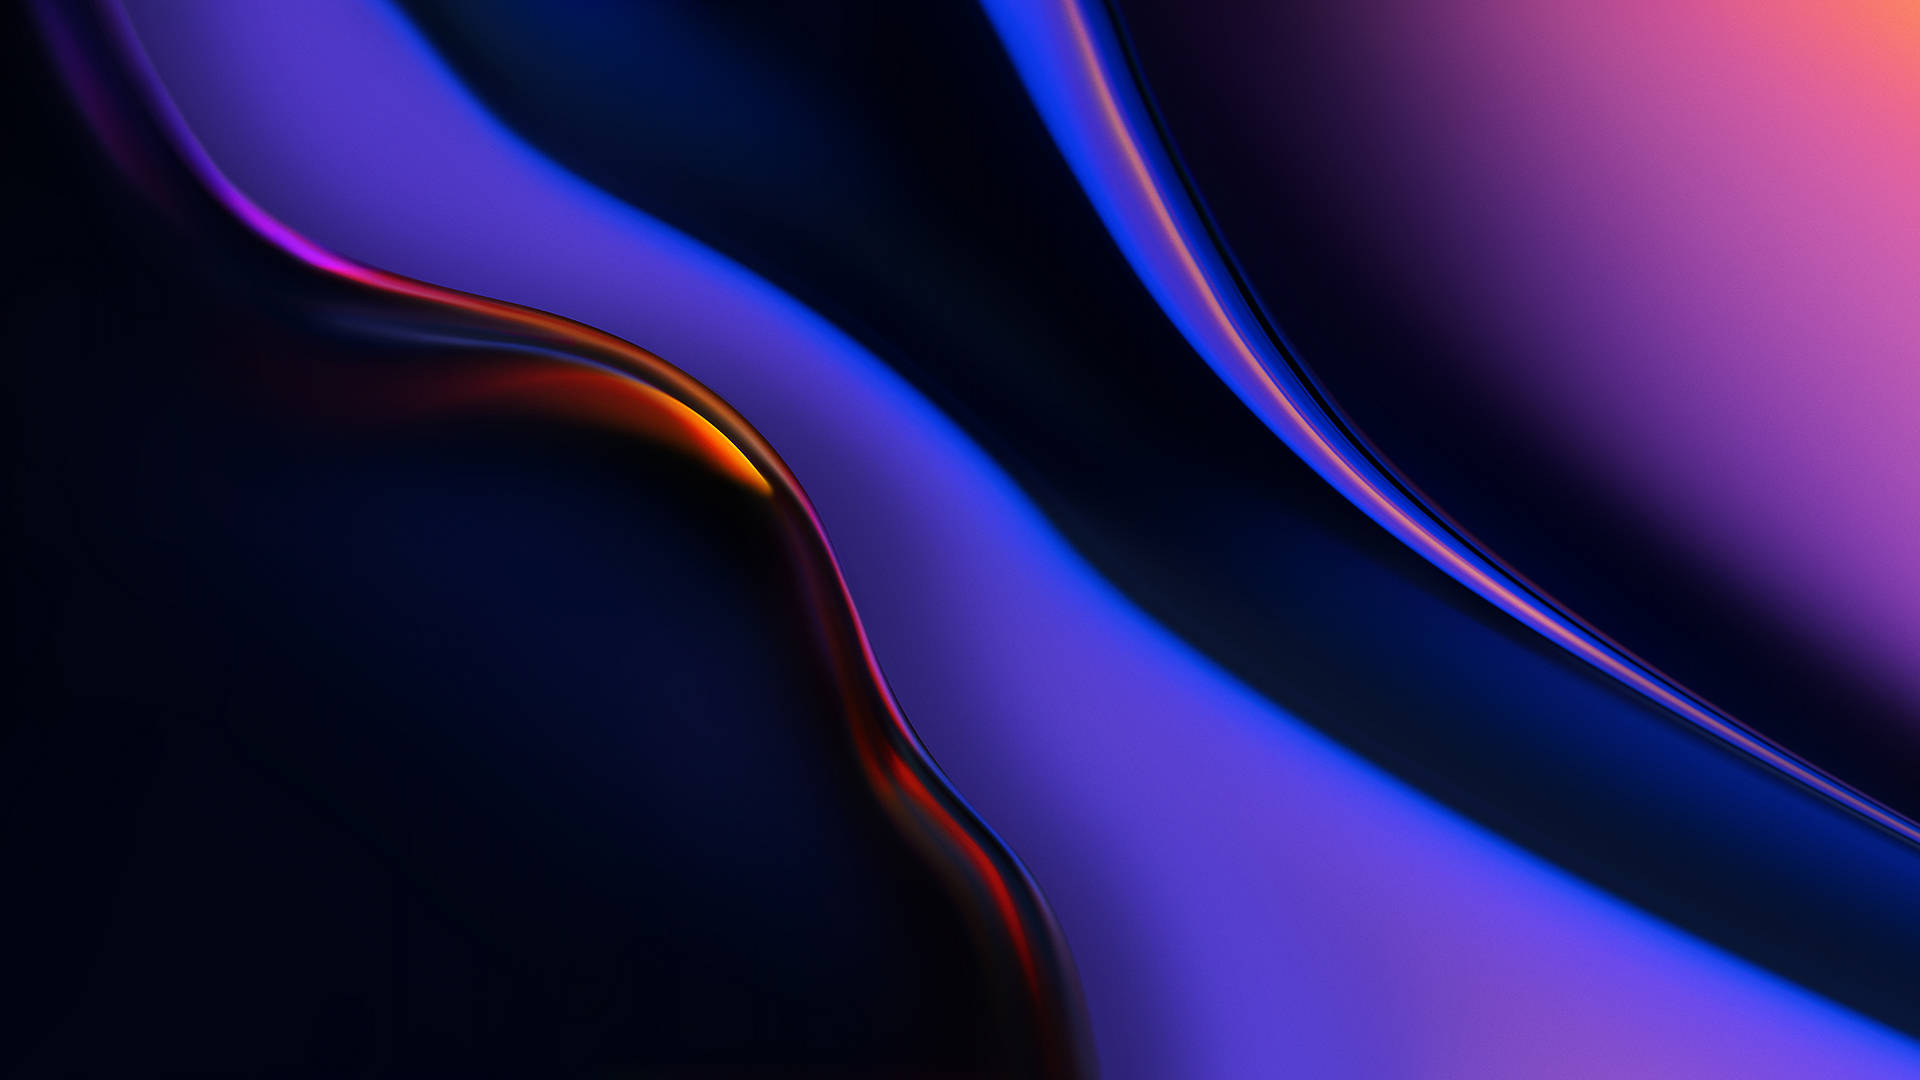 Sleek Oneplus Smartphone On A Blue Violet Background